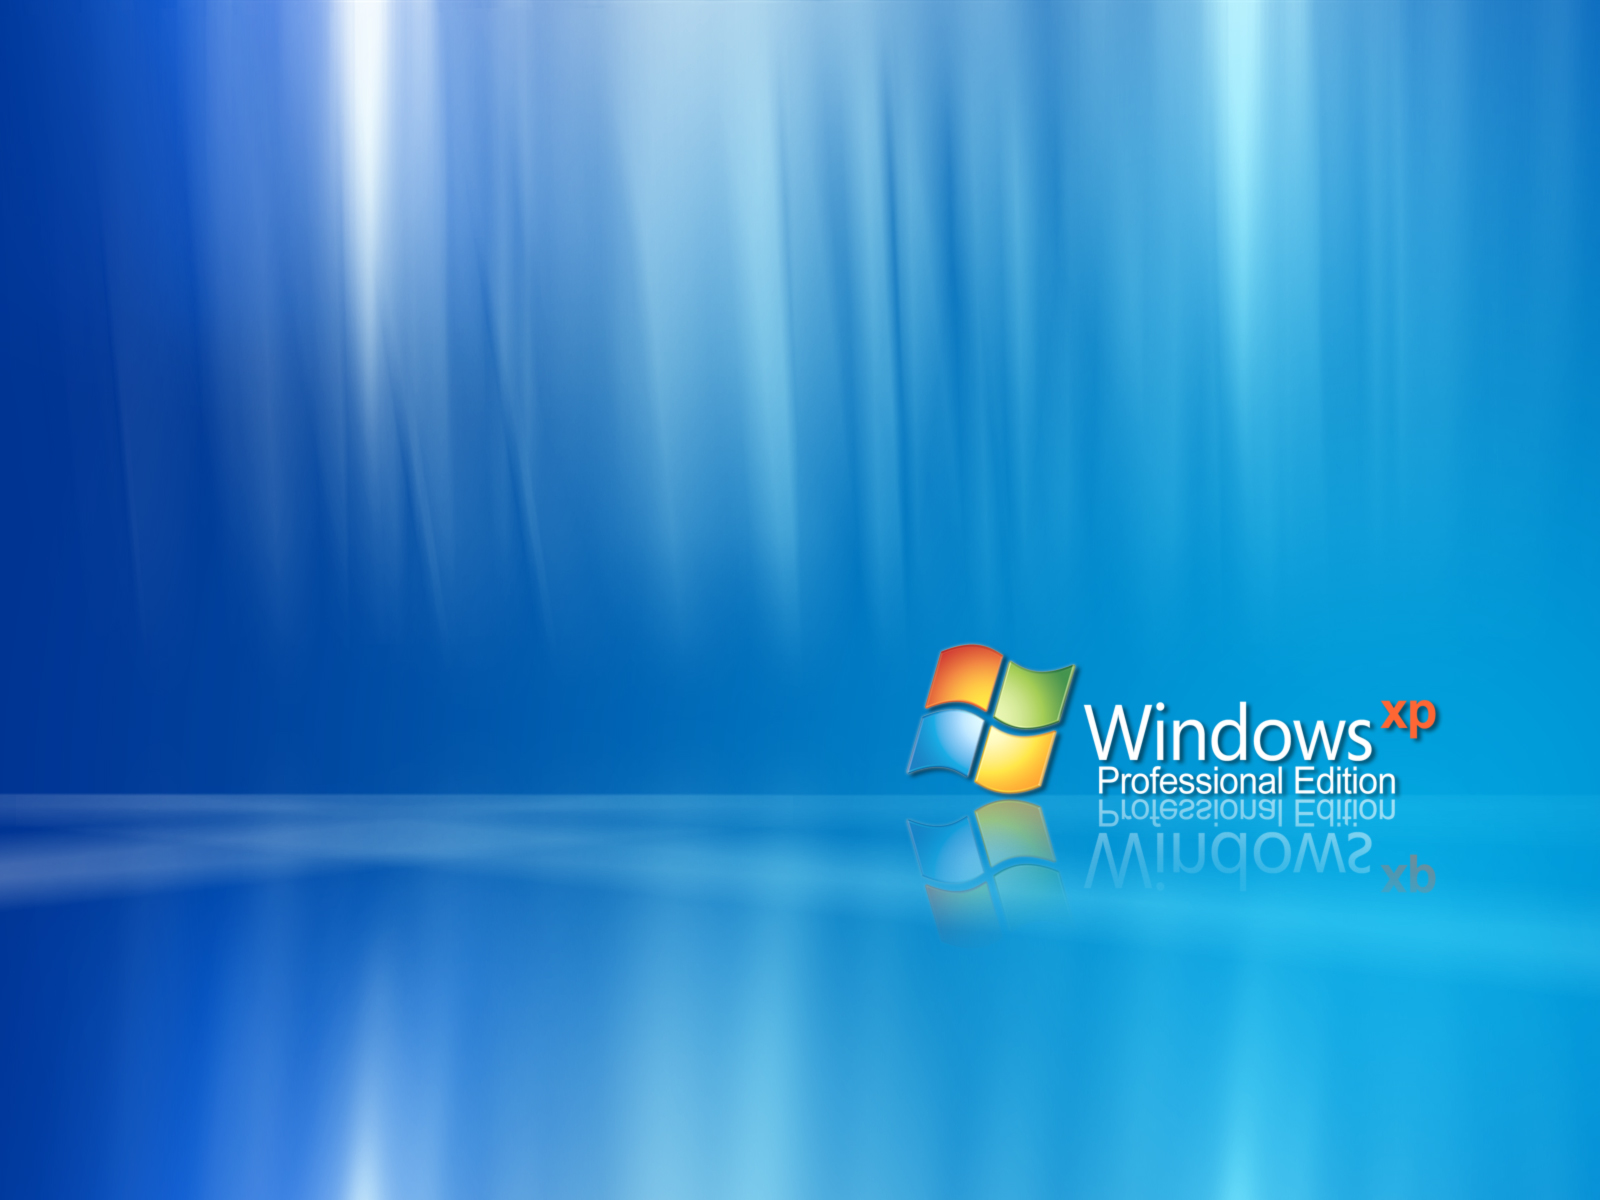 Windows Xp Wallpaper - 660656